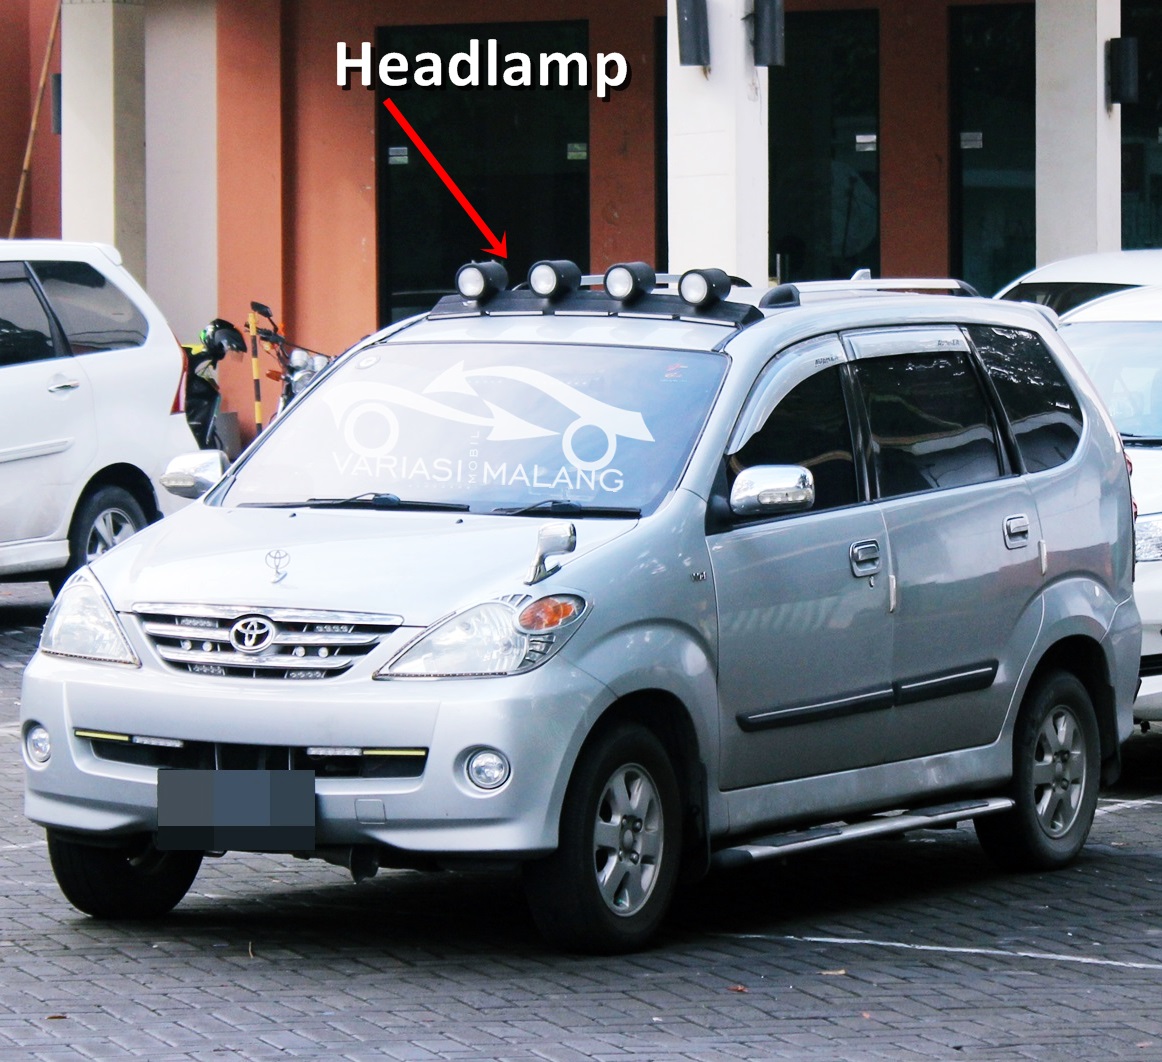 Jual Roof Lamp Head Lamp Untuk Mobil Avanza Xenia 